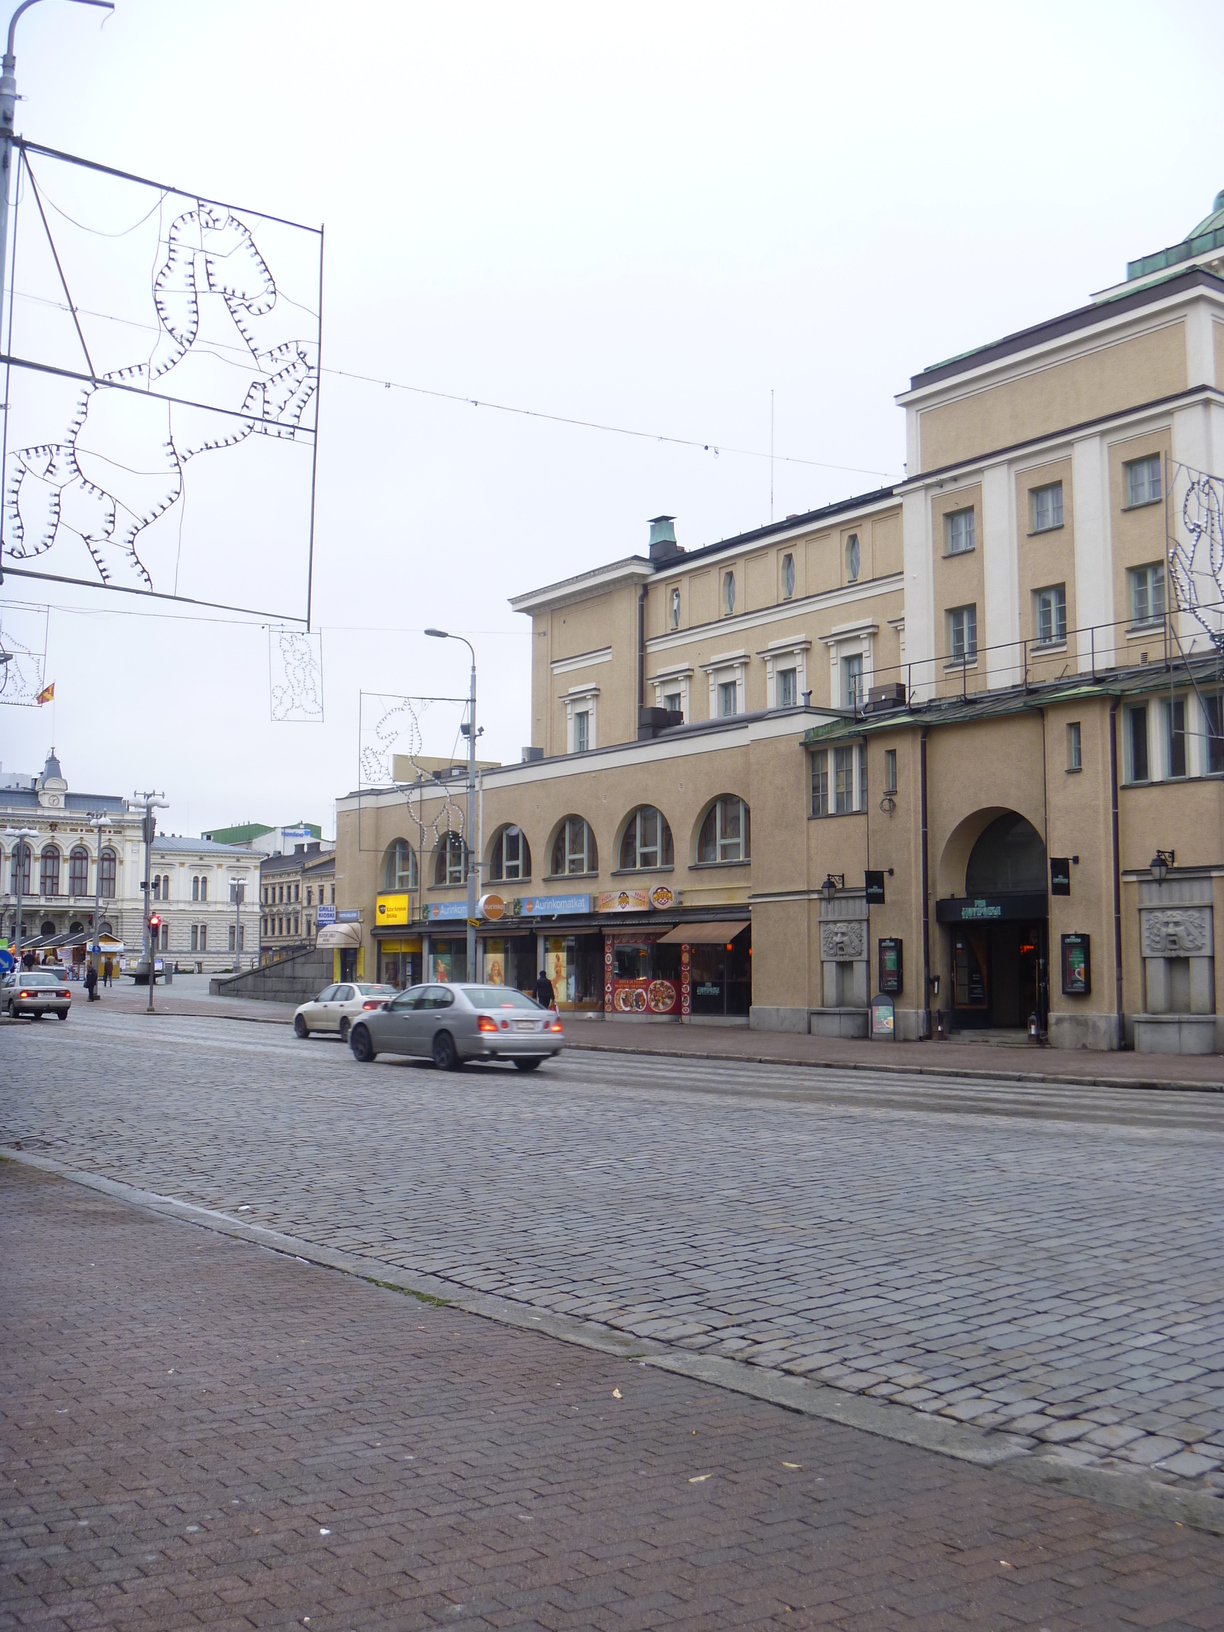 Tampere Street